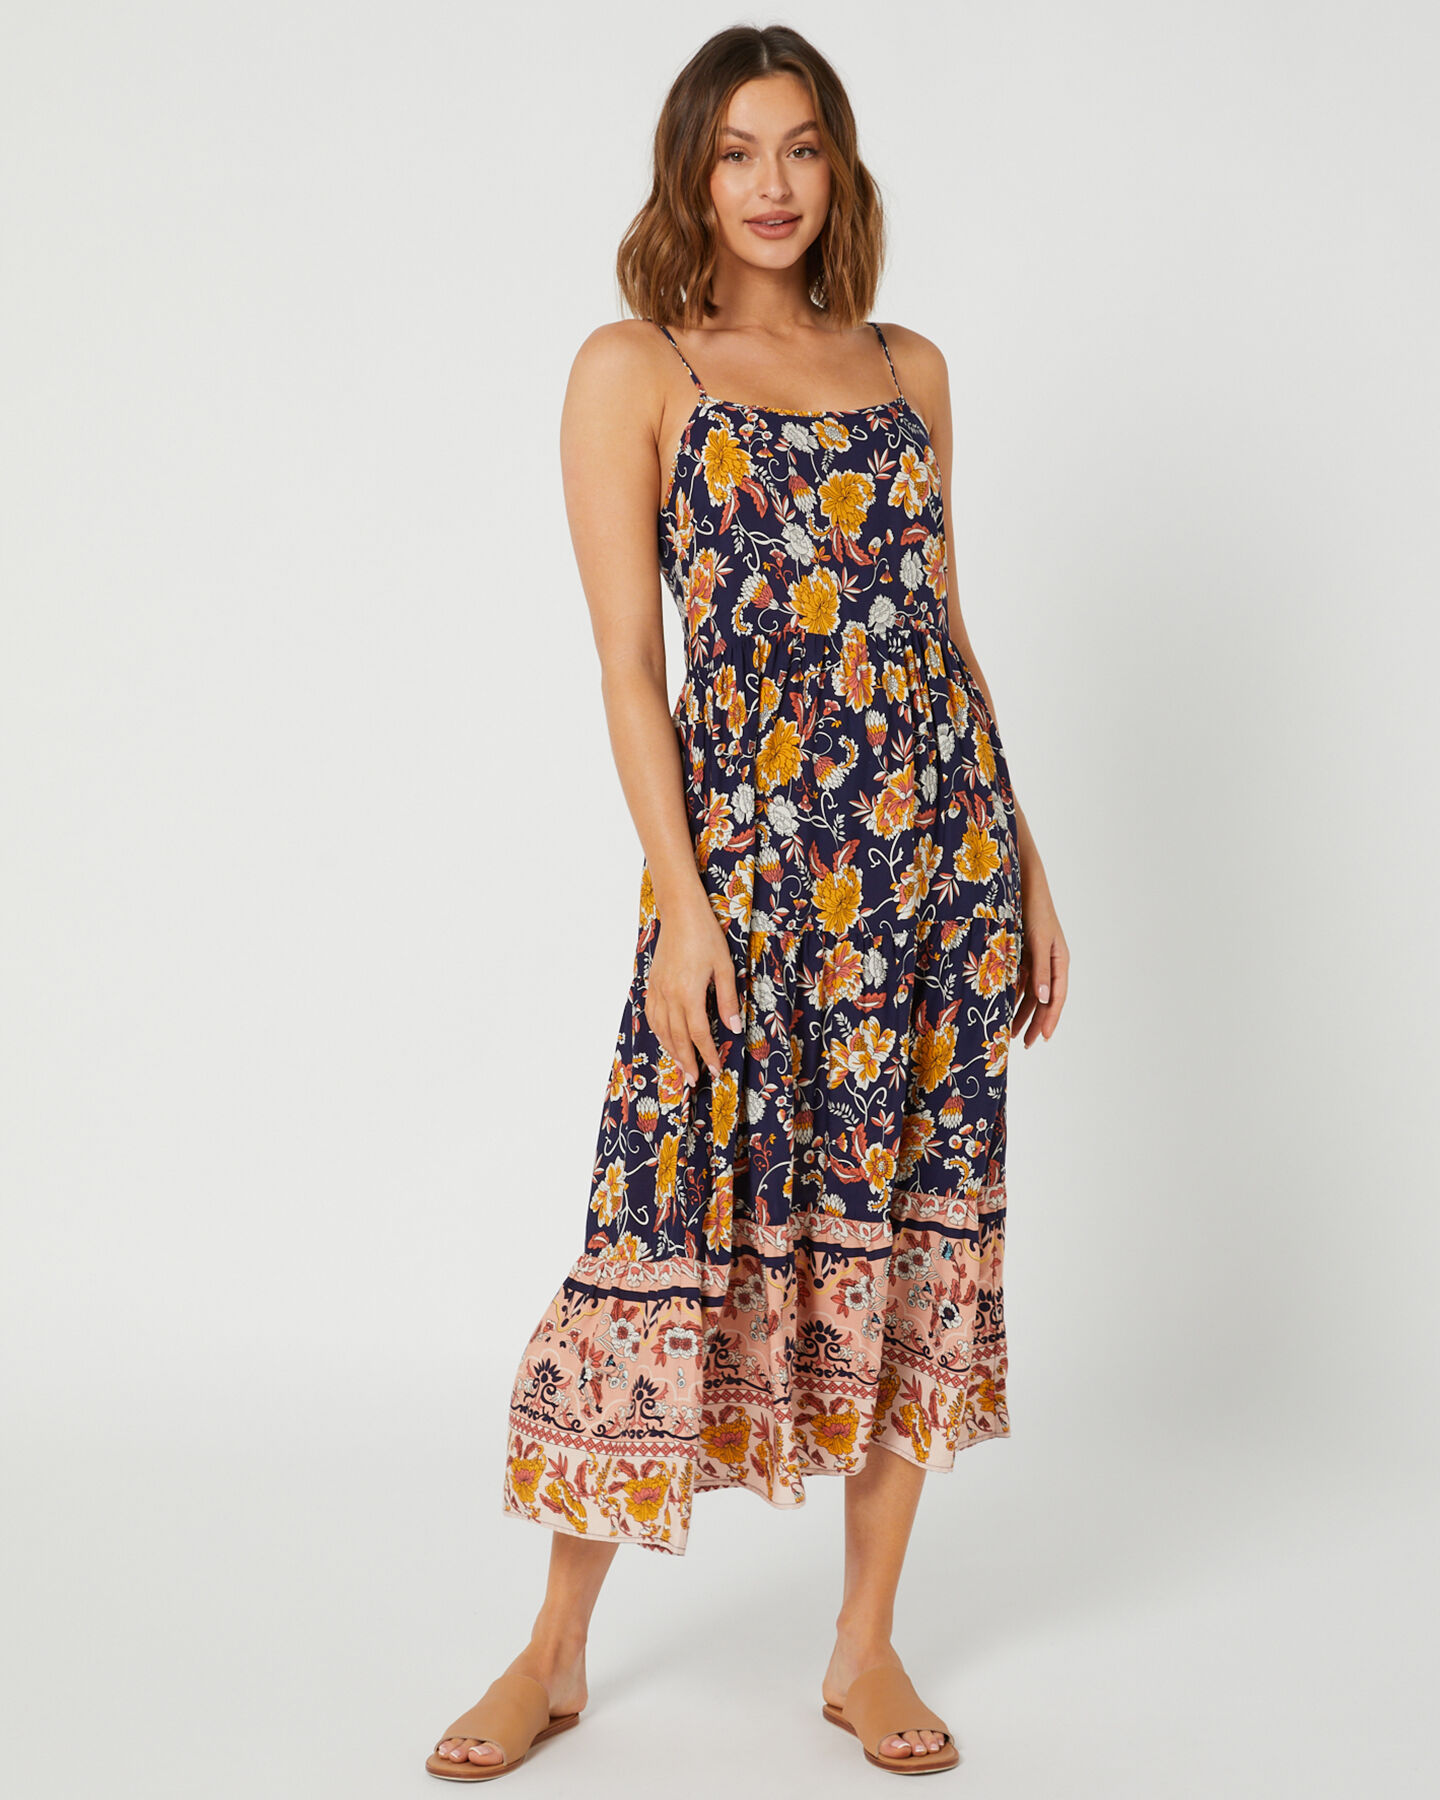 Maxi Dresses - Summer, Floral, Short & Long Maxi Dress for Women